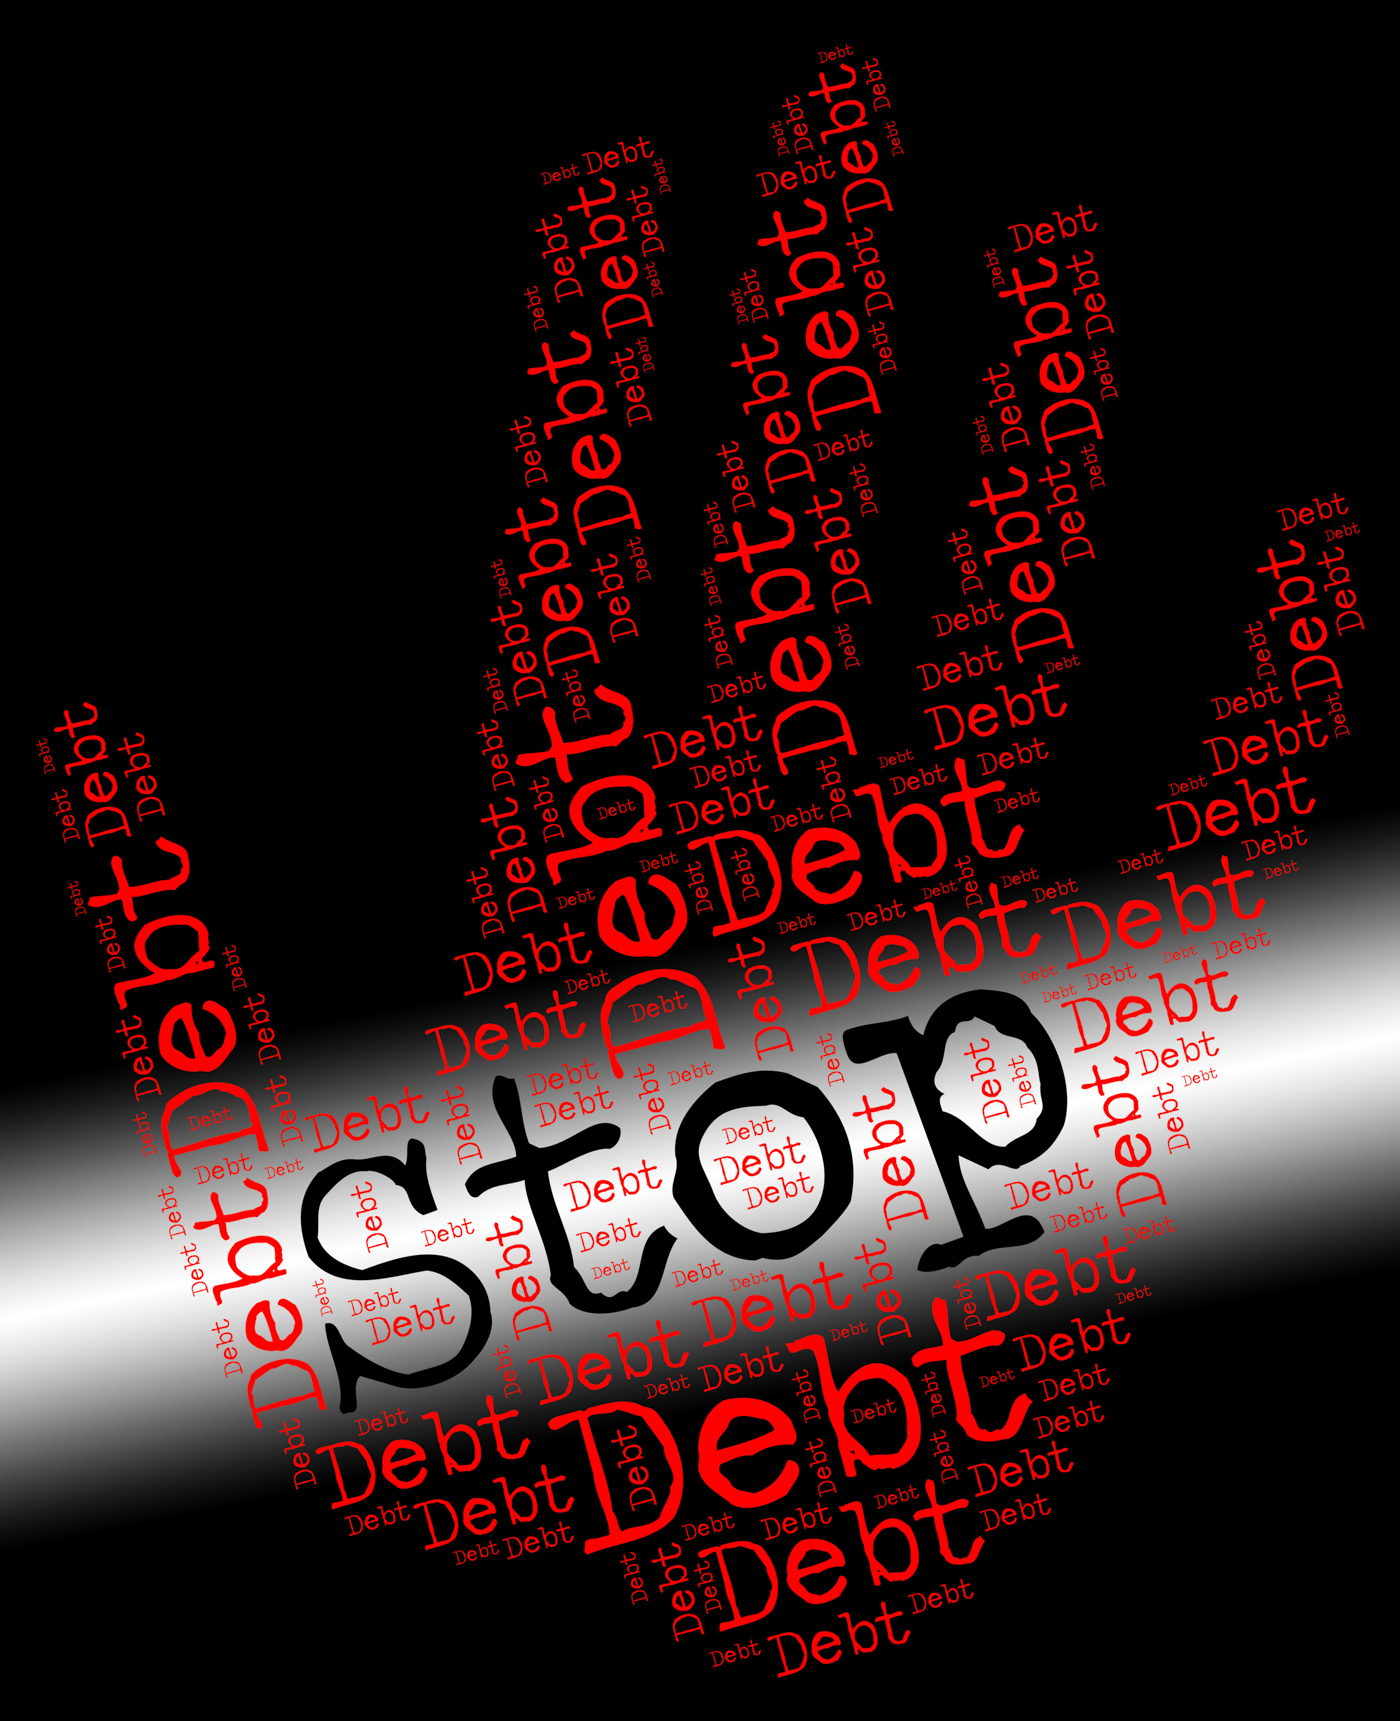 Stop debt represents financial obligation and arrears photo